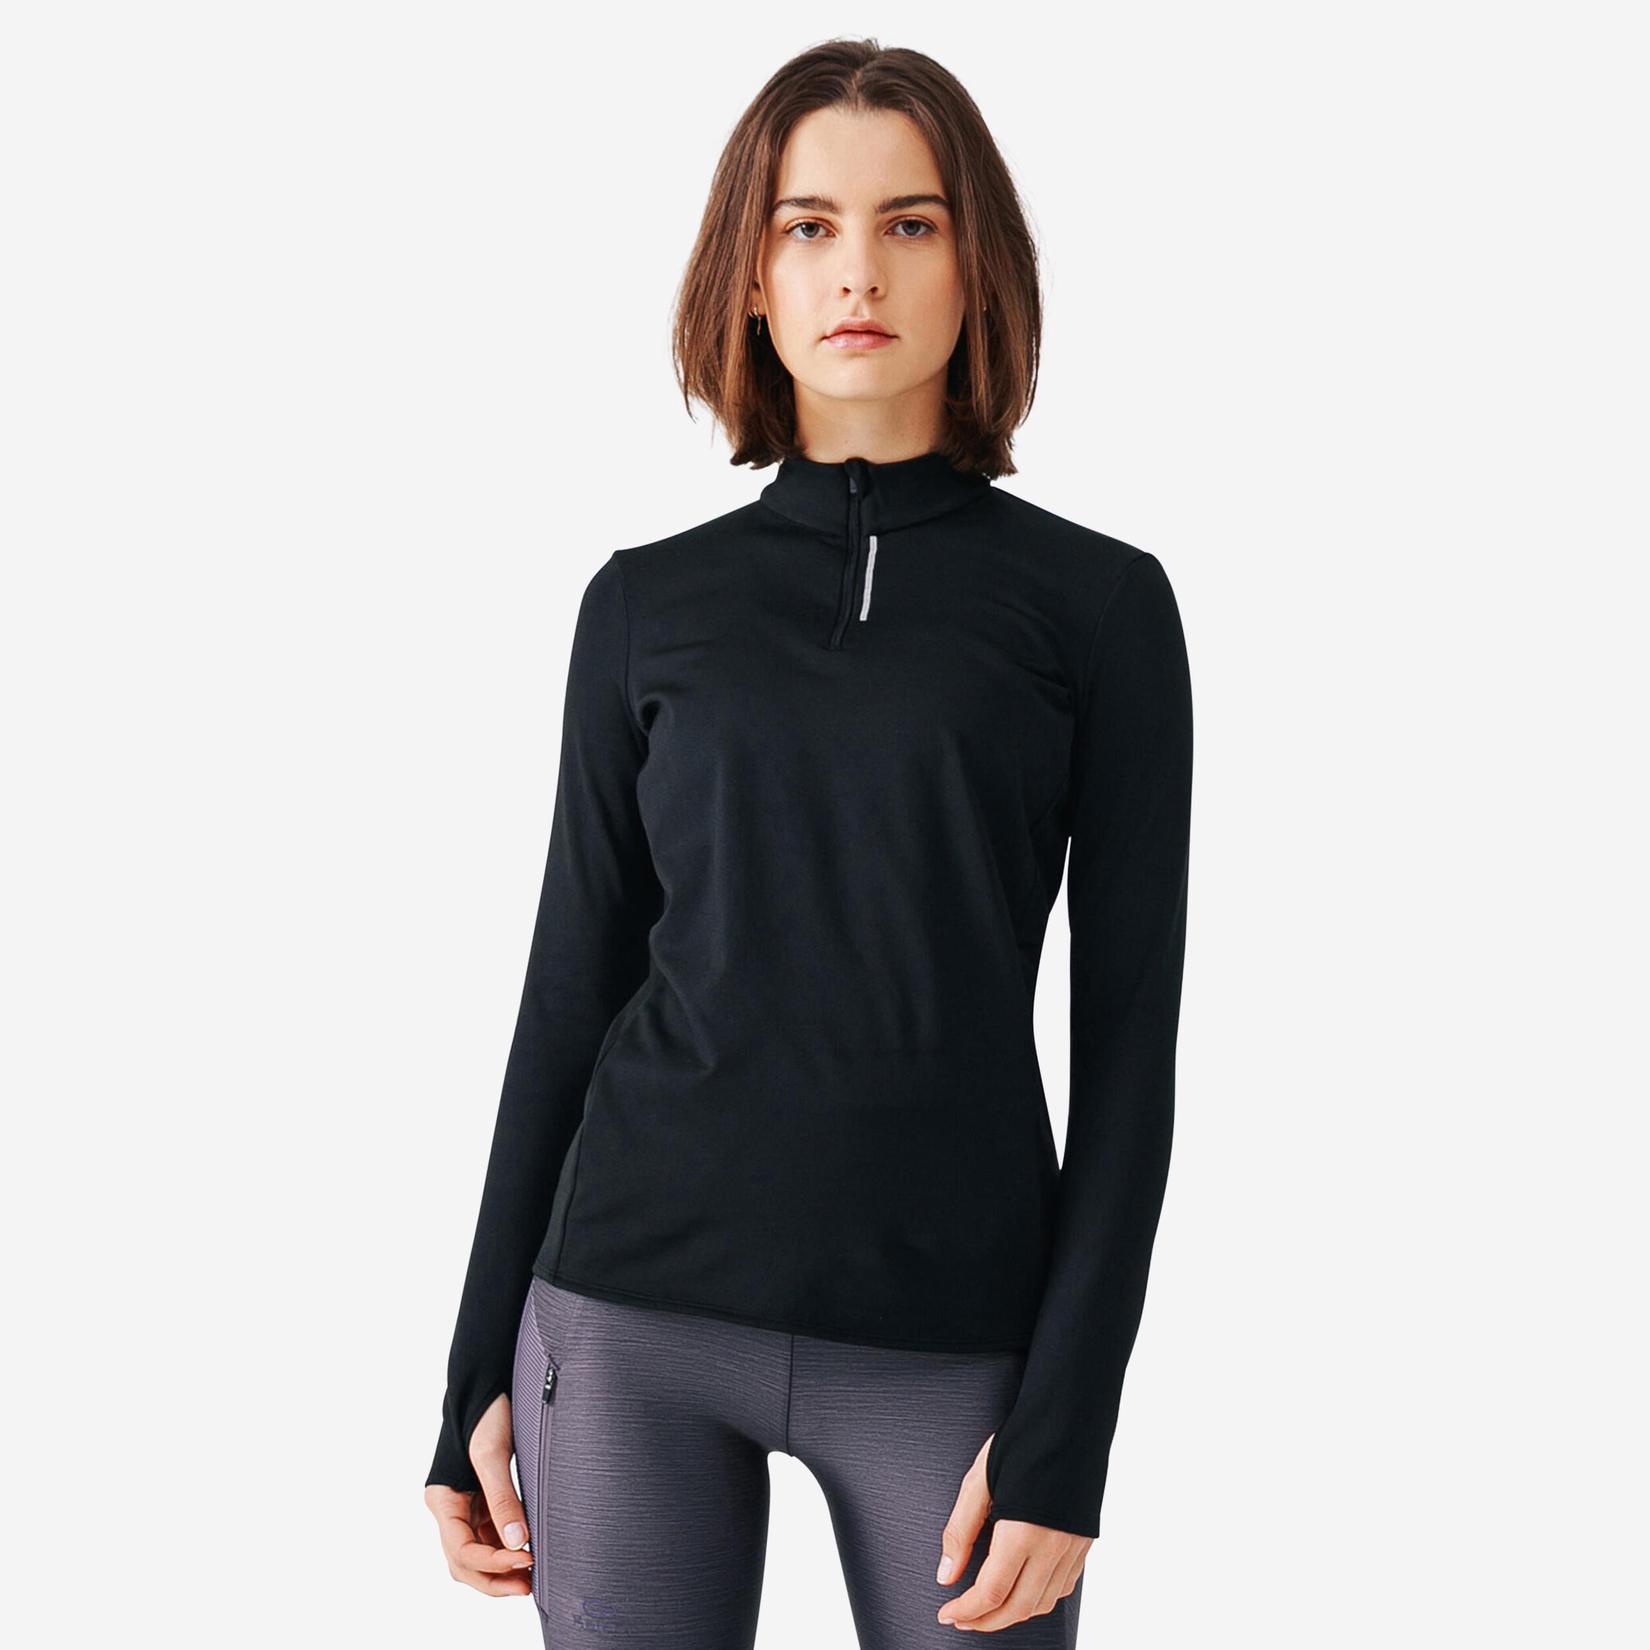 Zip Warm women's long-sleeved running T-shirt - black offers at R 299 in Decathlon